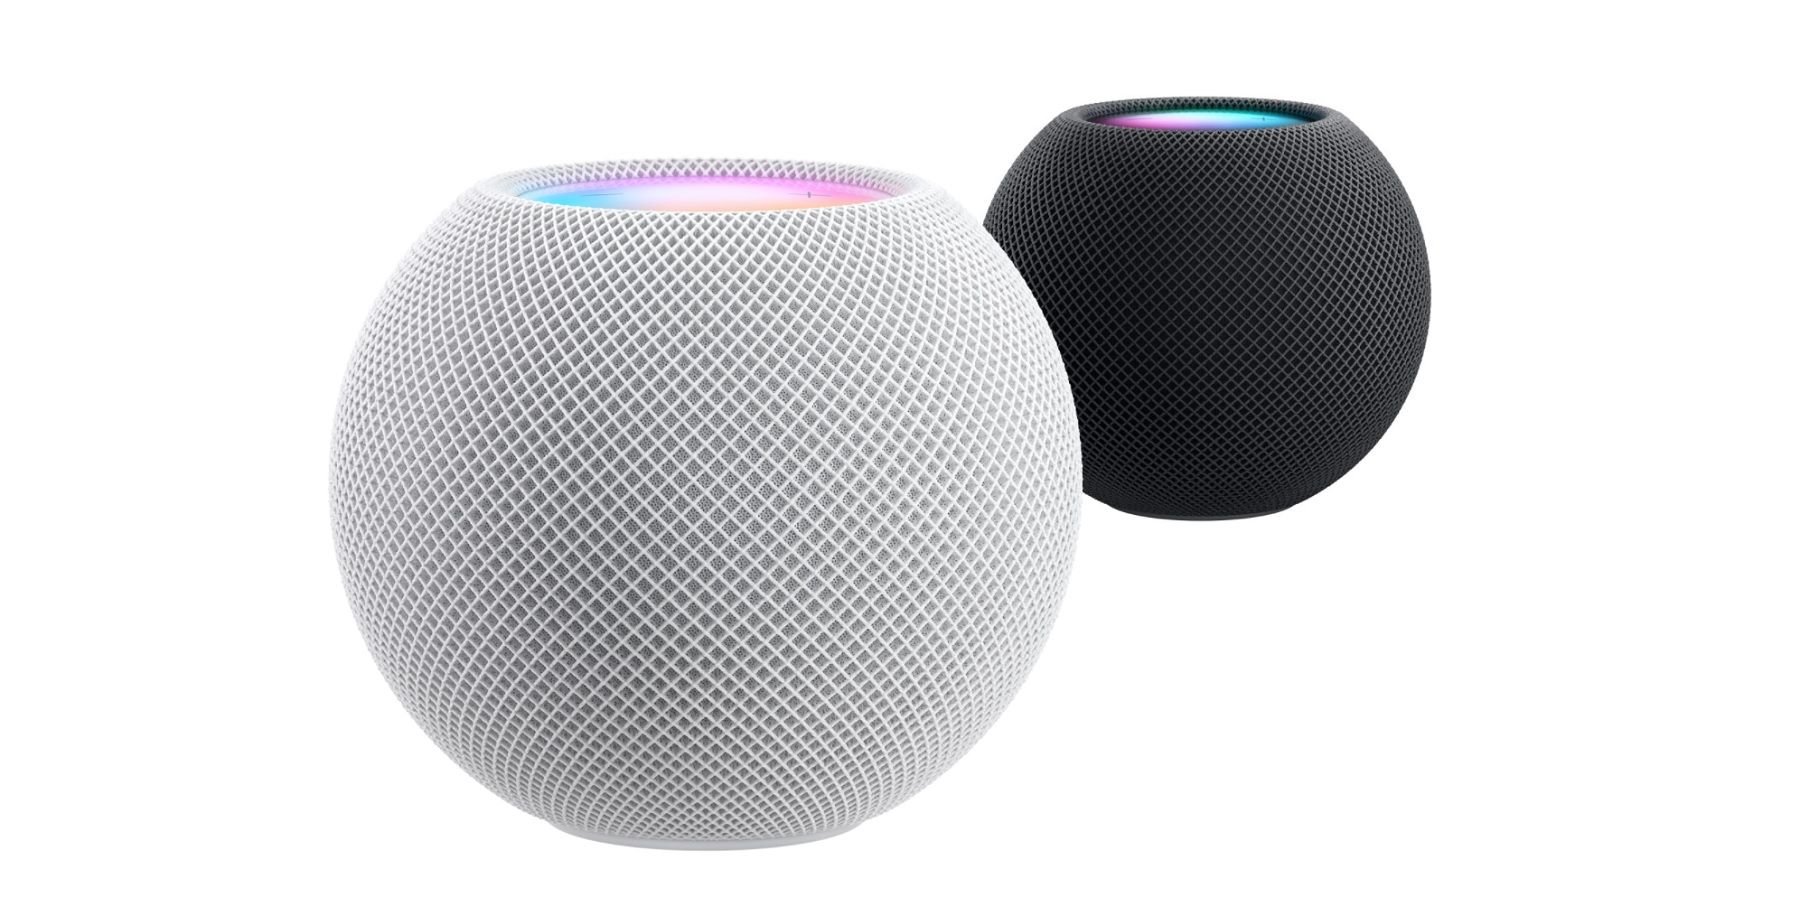 best speakers for mac mini